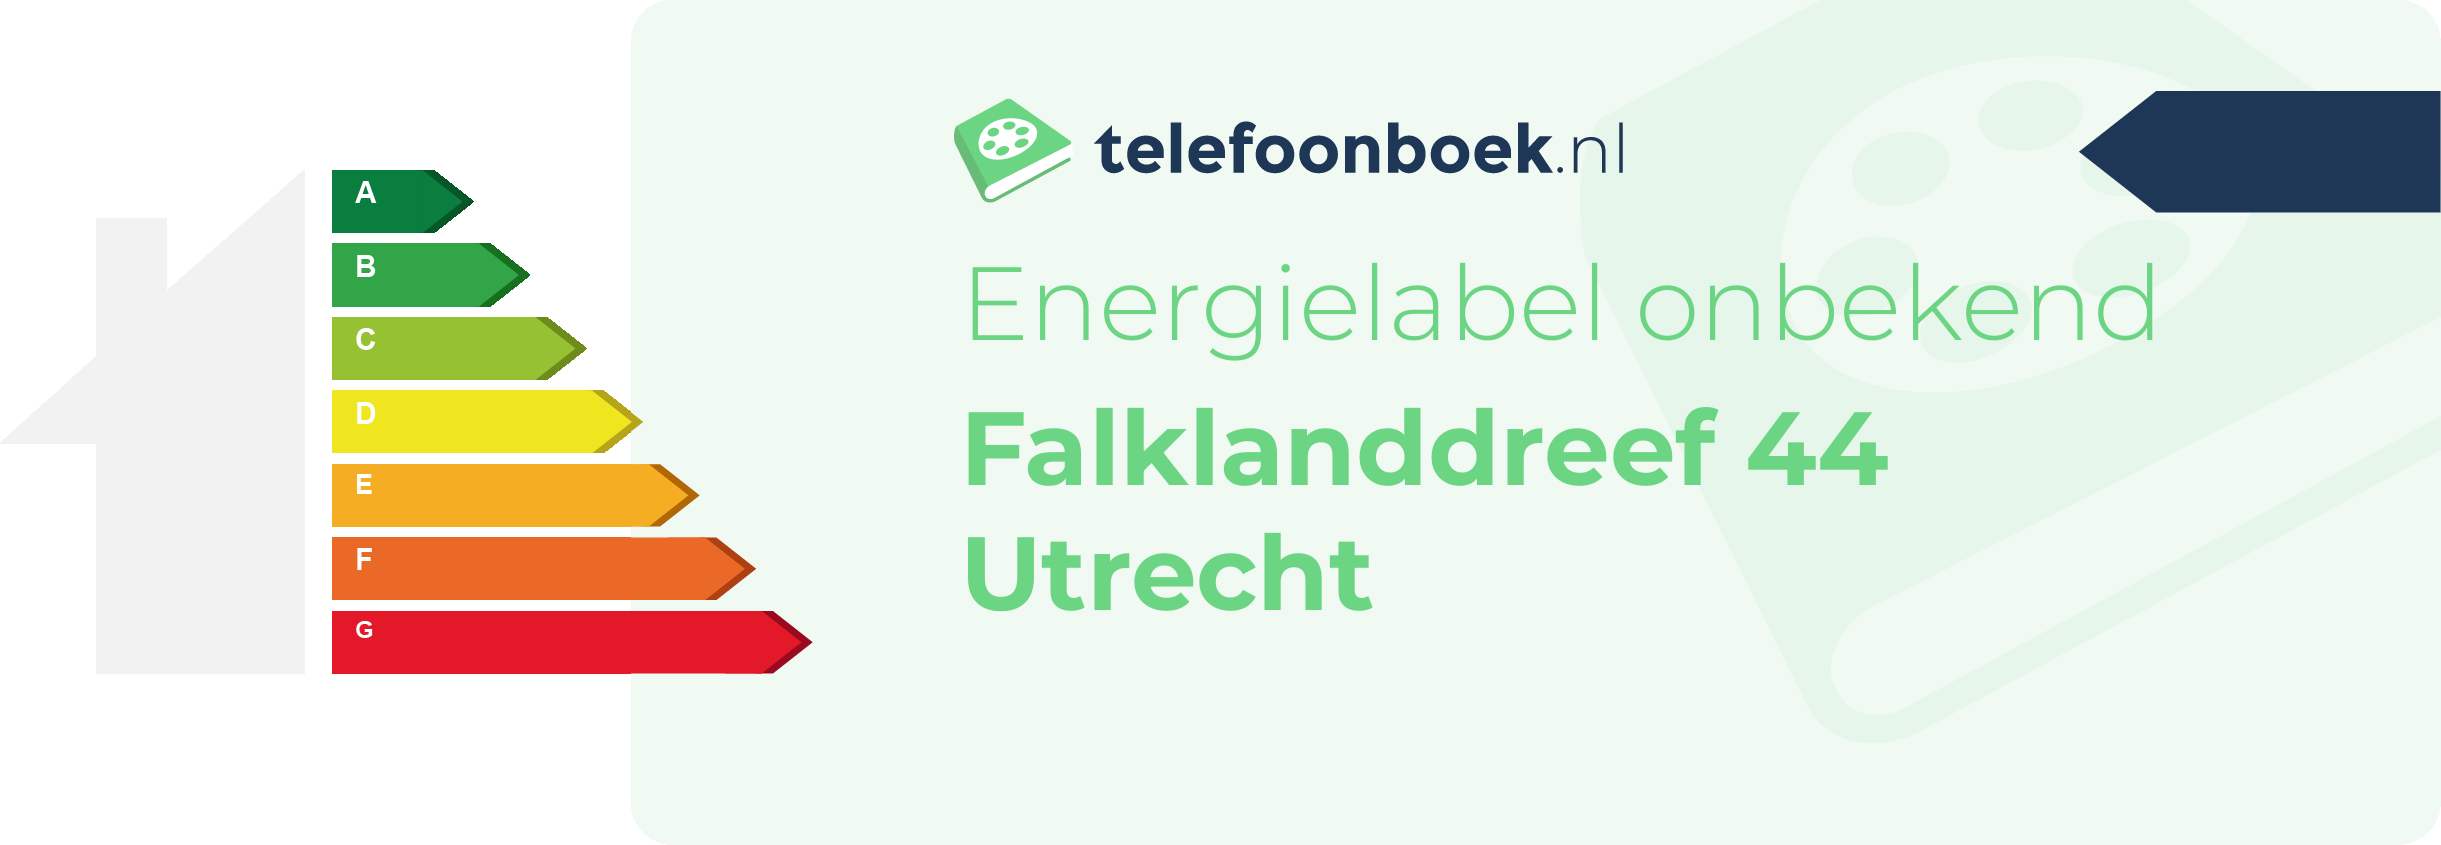 Energielabel Falklanddreef 44 Utrecht